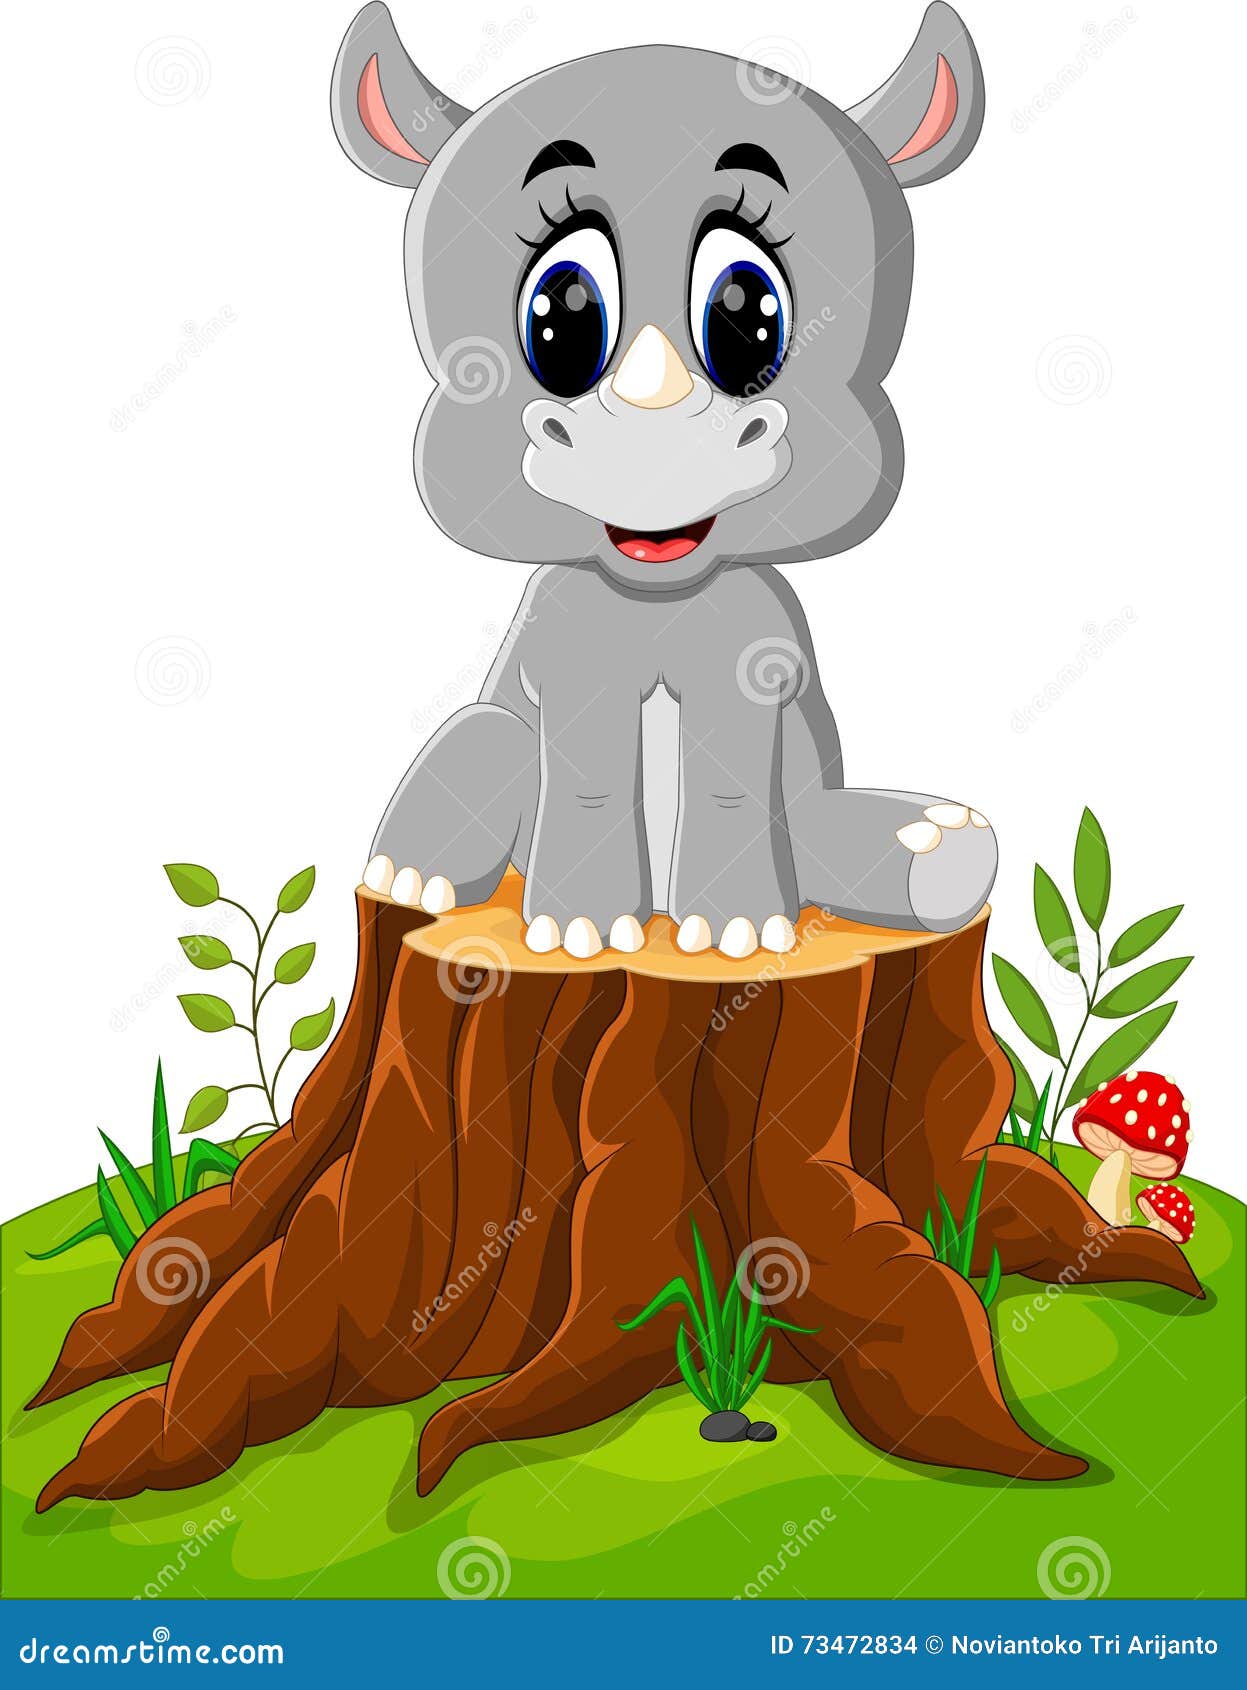 Cartoon rhino sitting on tree stump